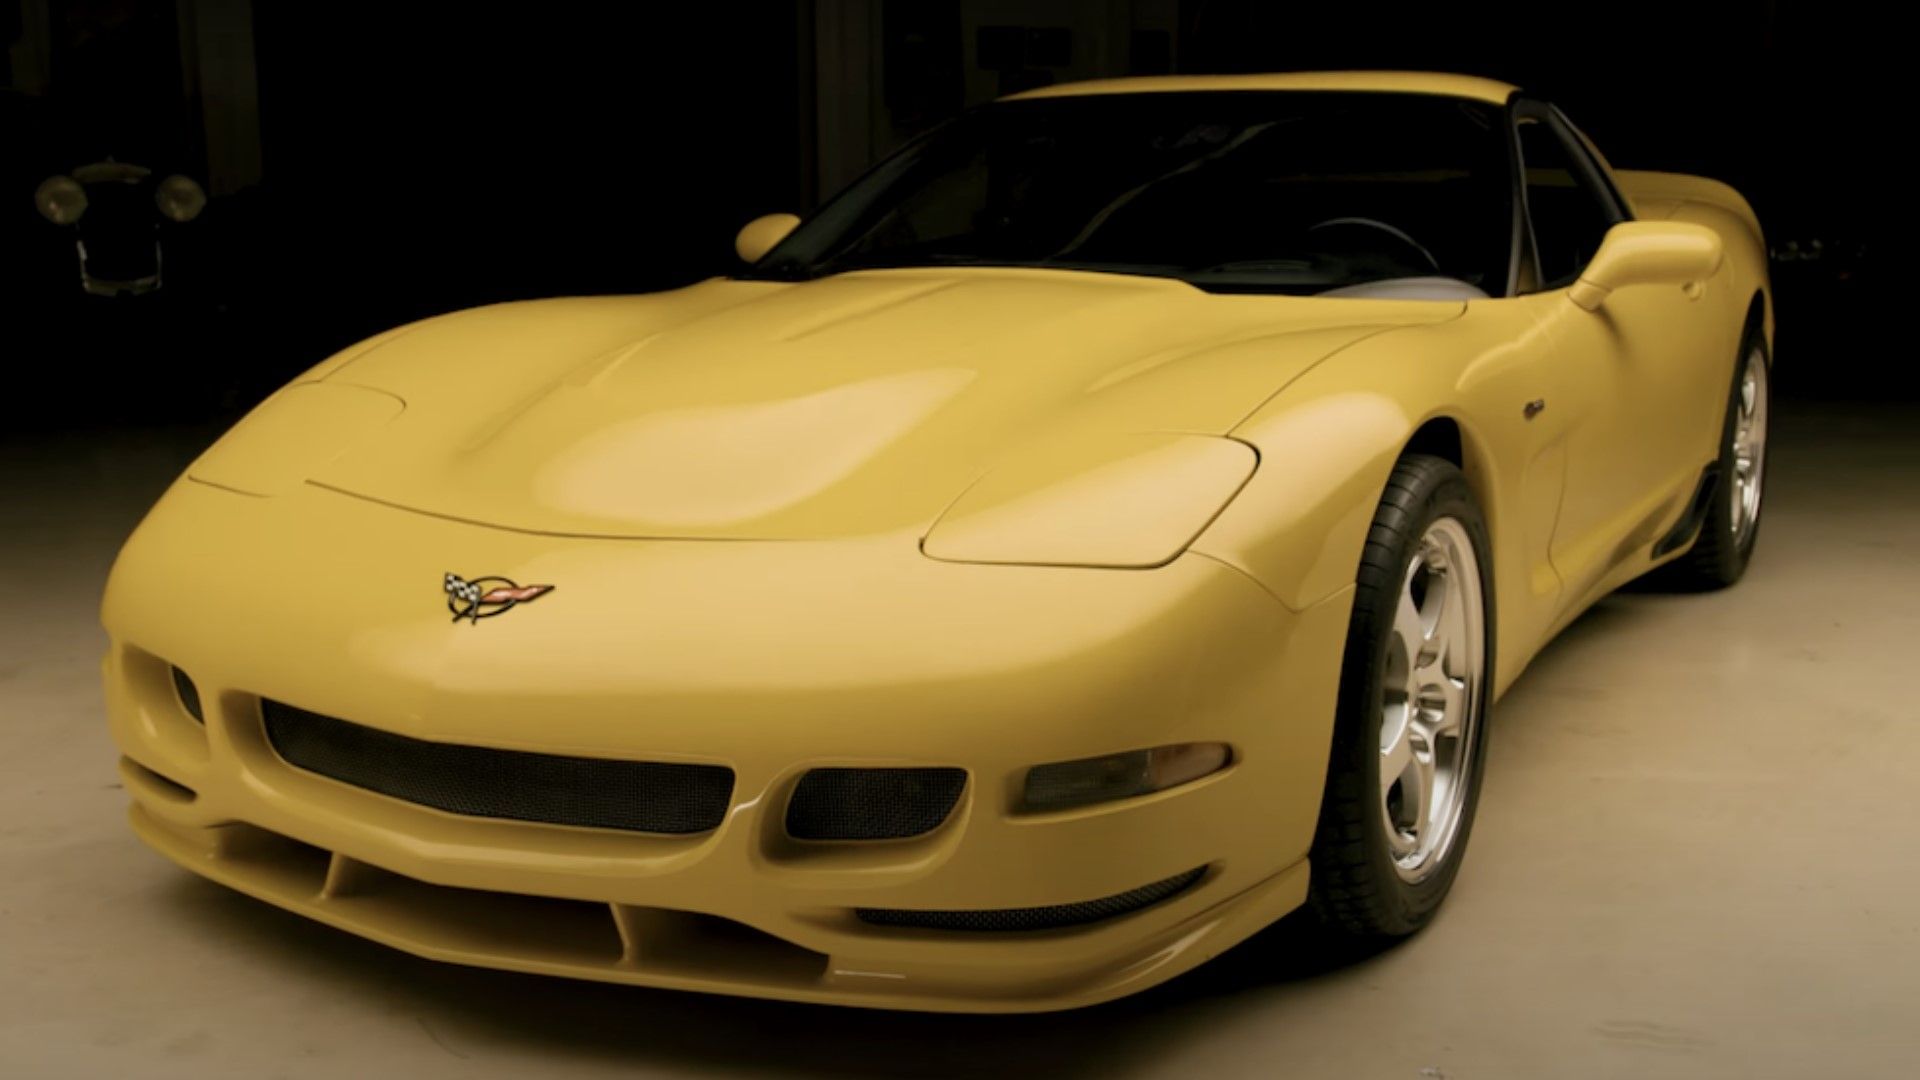 Jay Leno's Corvette TigerShark